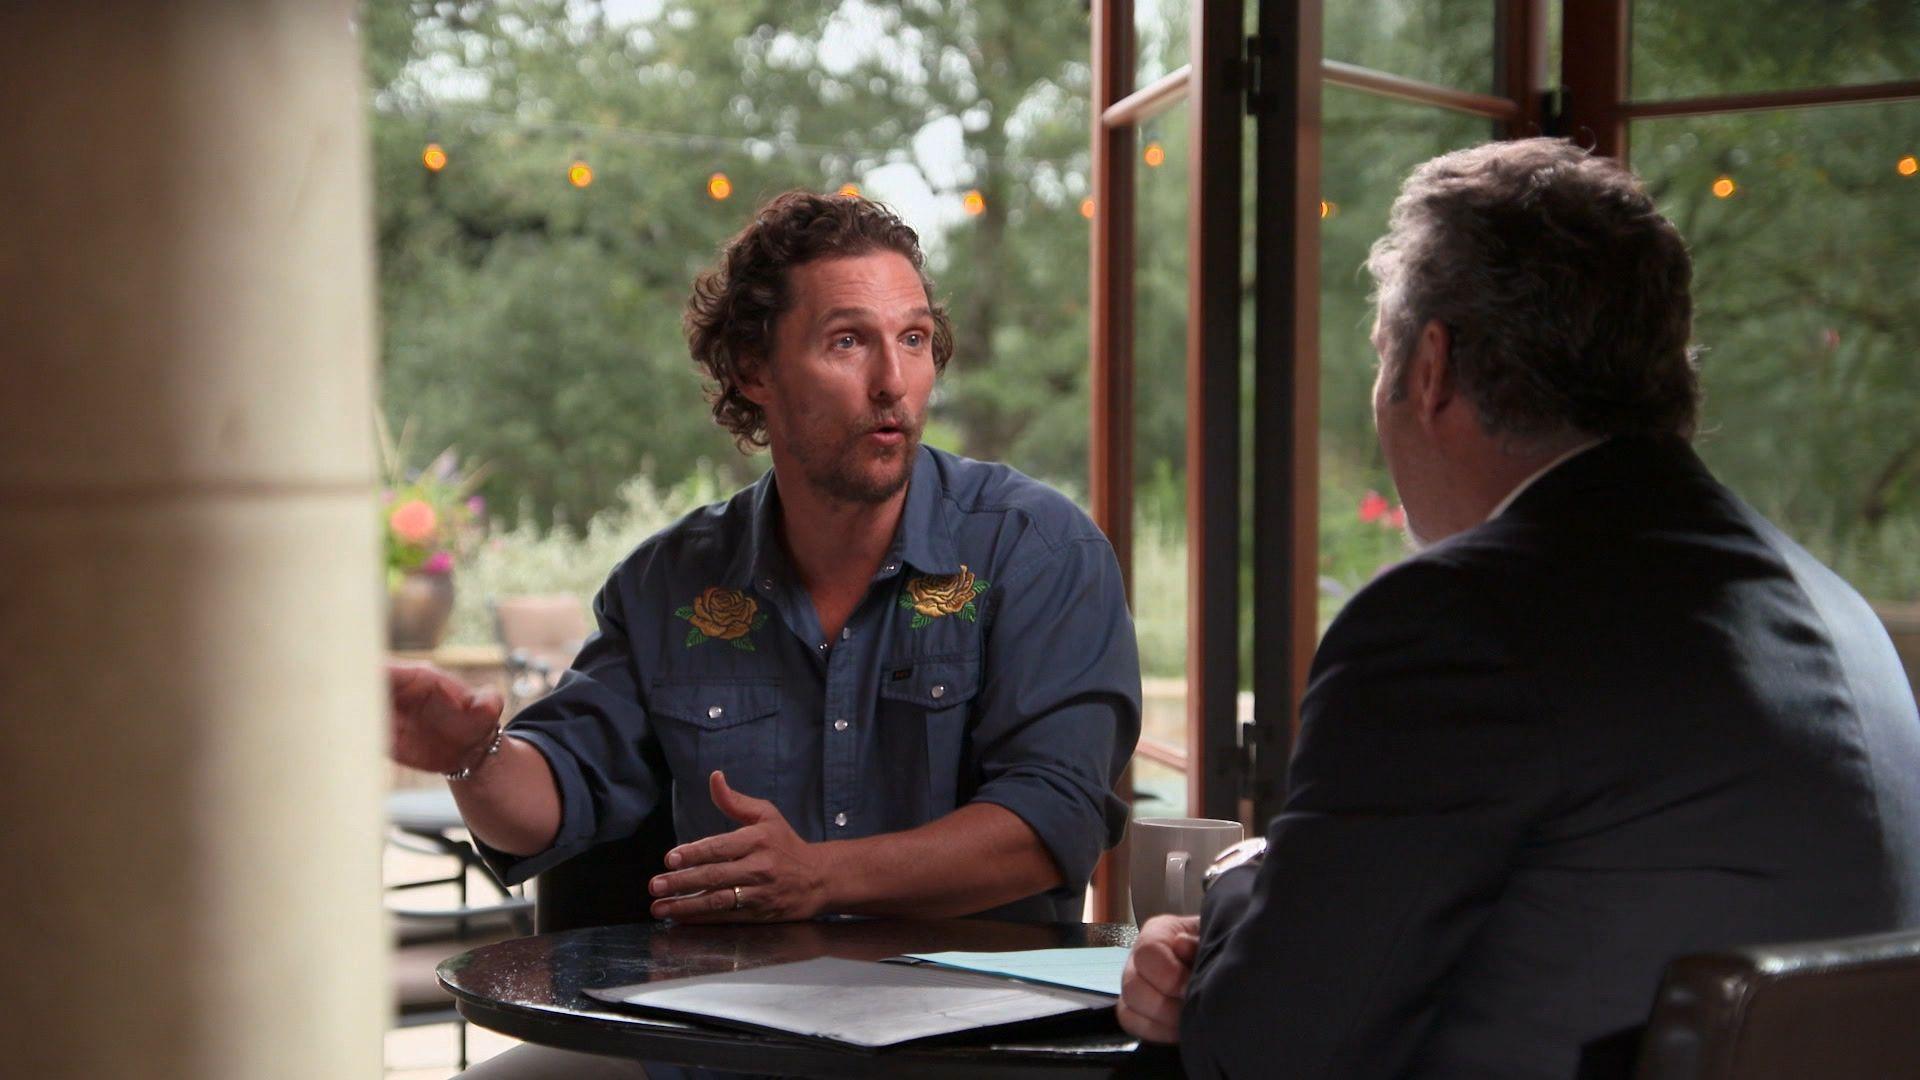 Matthew McConaughey tells Feherty about storytelling